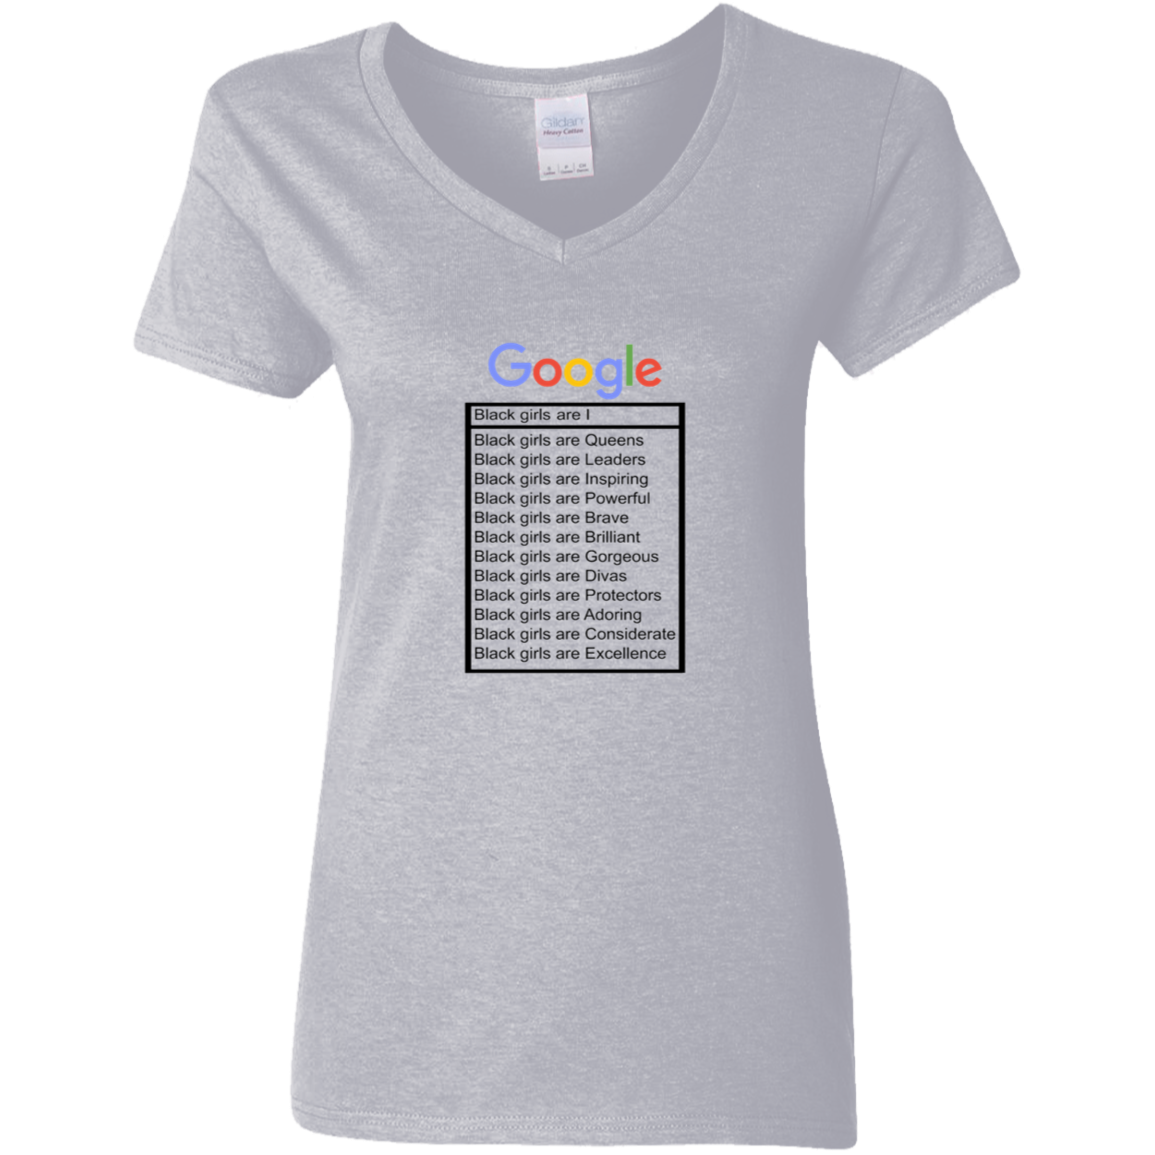 Google "Black Girls Are" T-Shirt